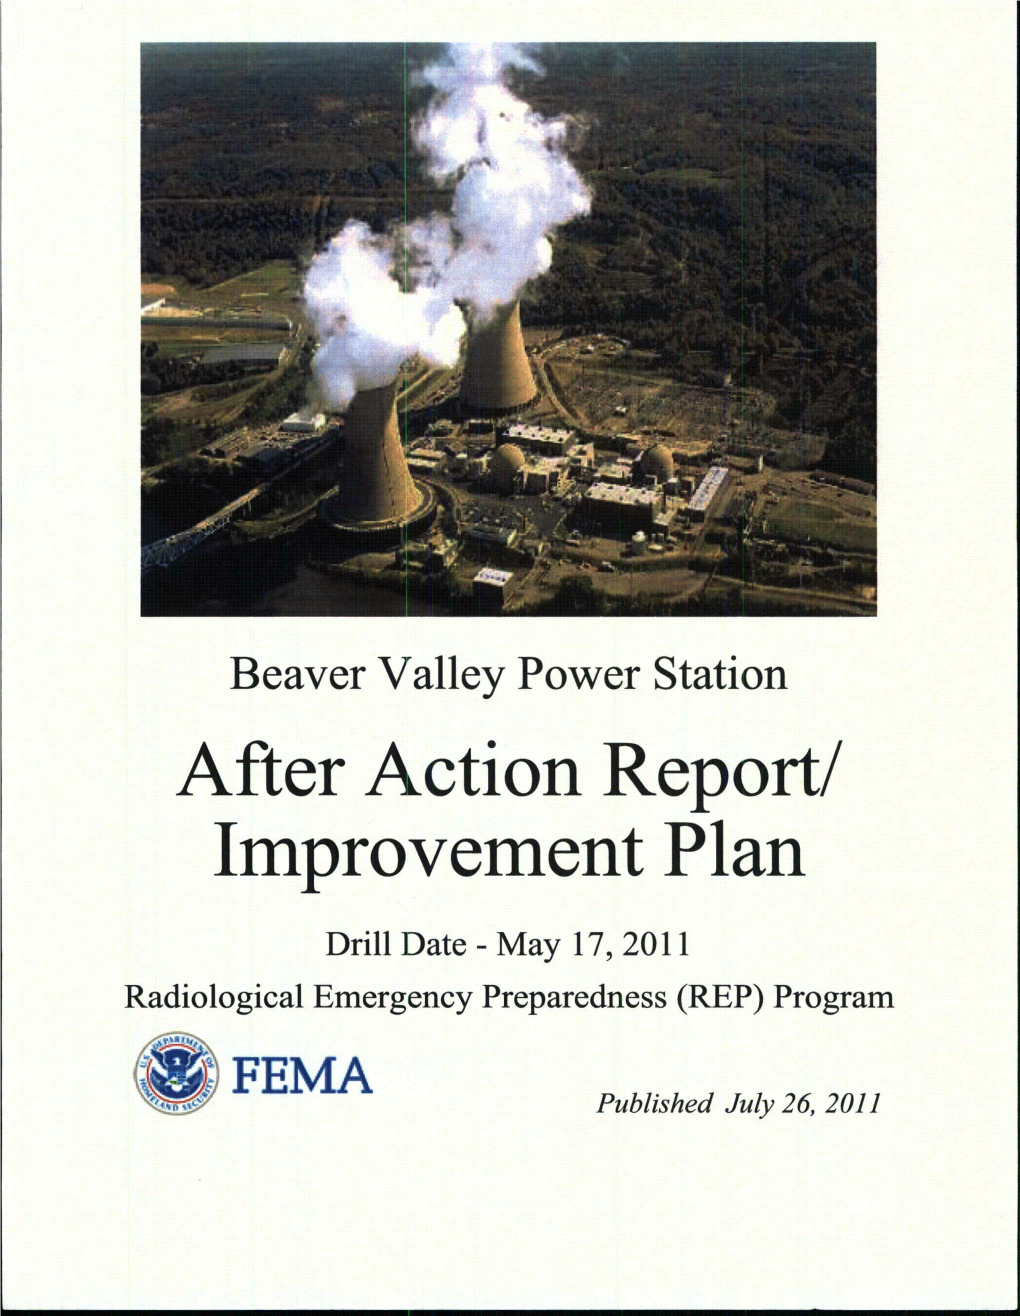 FEMA Beaver Valley Power Station